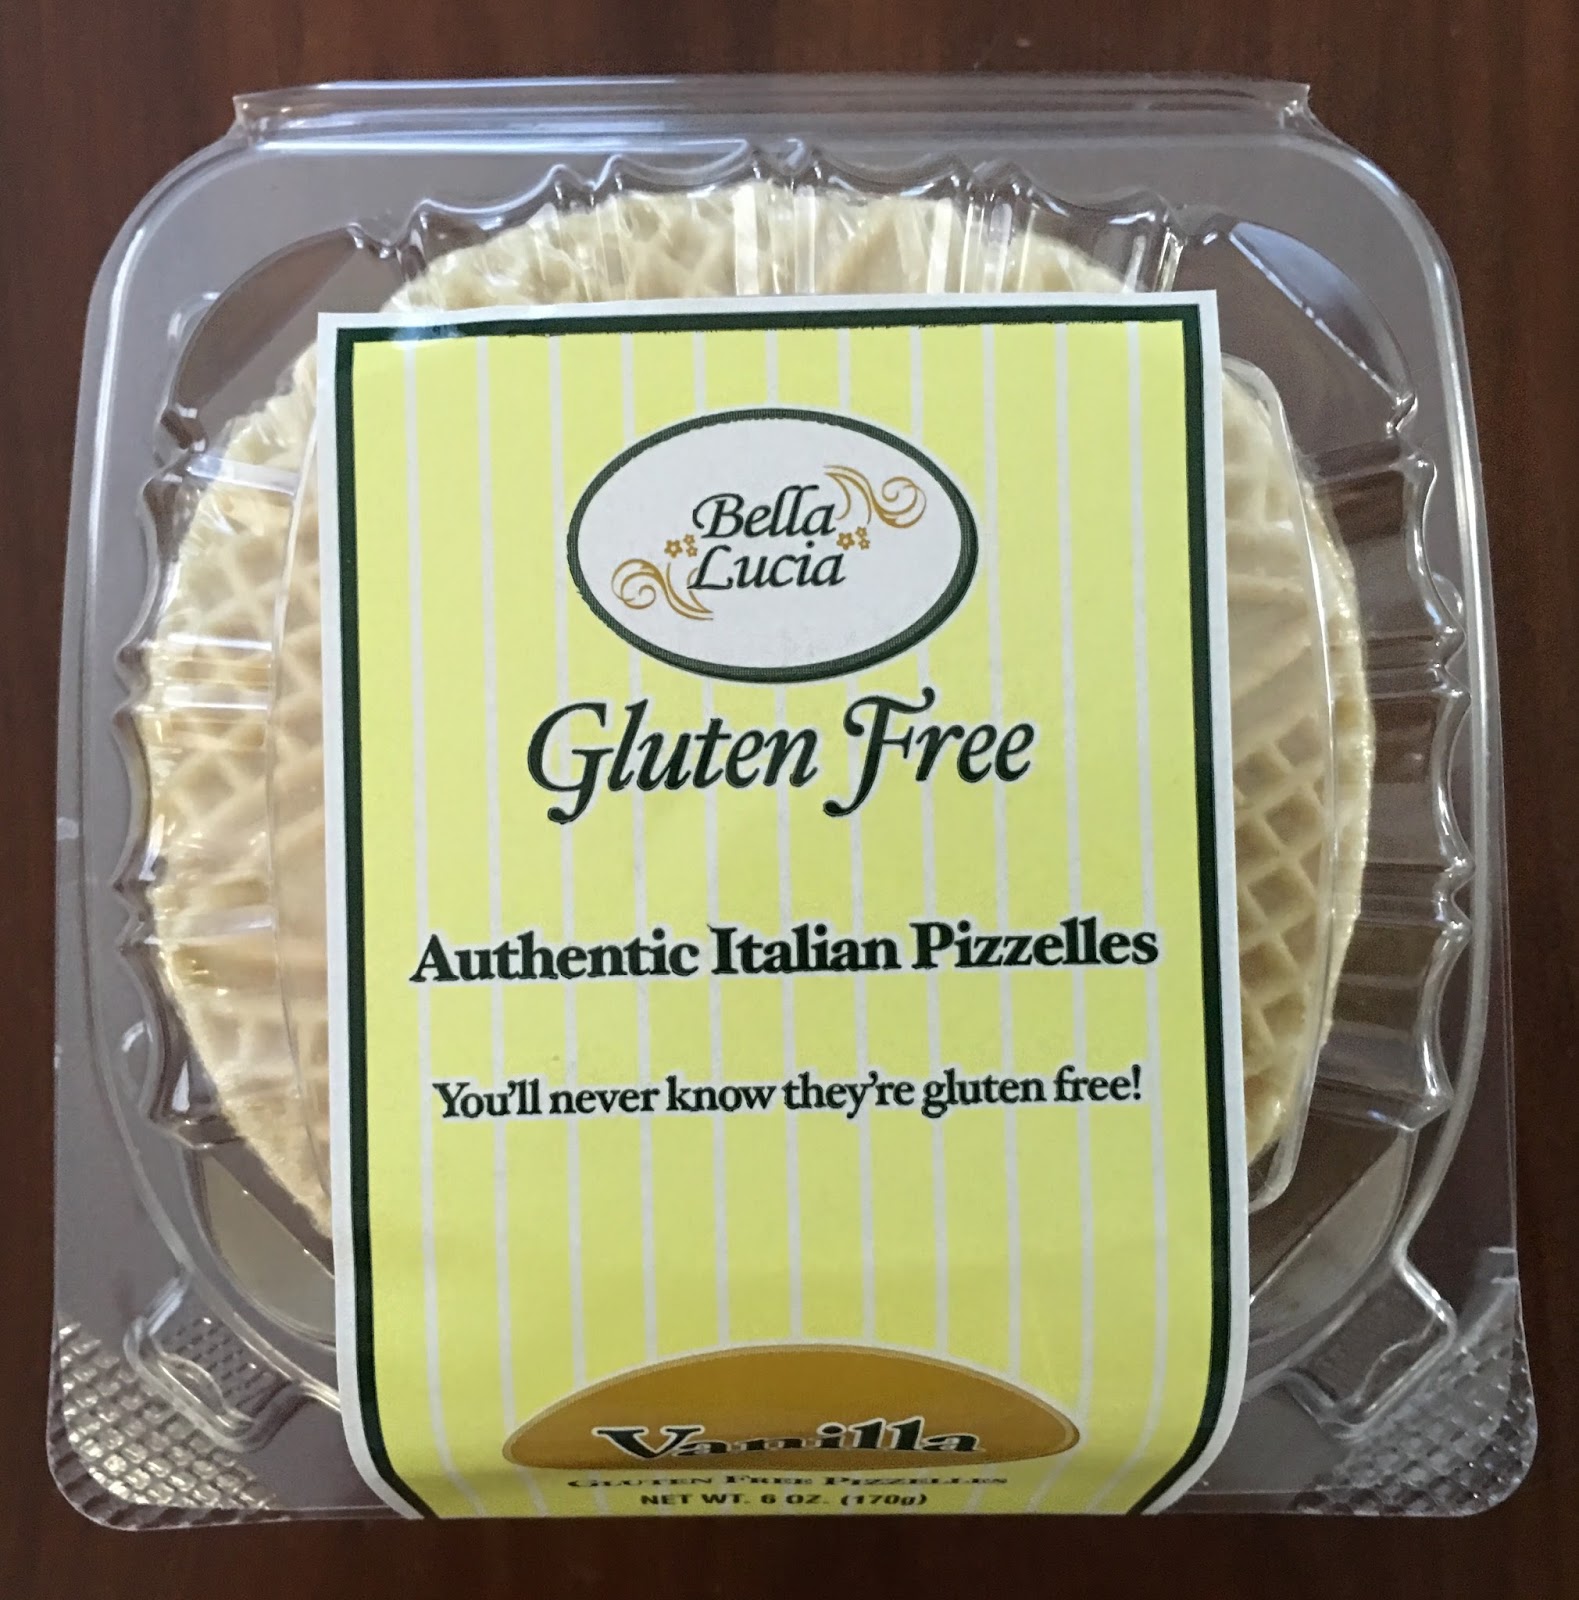 Gluten-Free Pizzelles